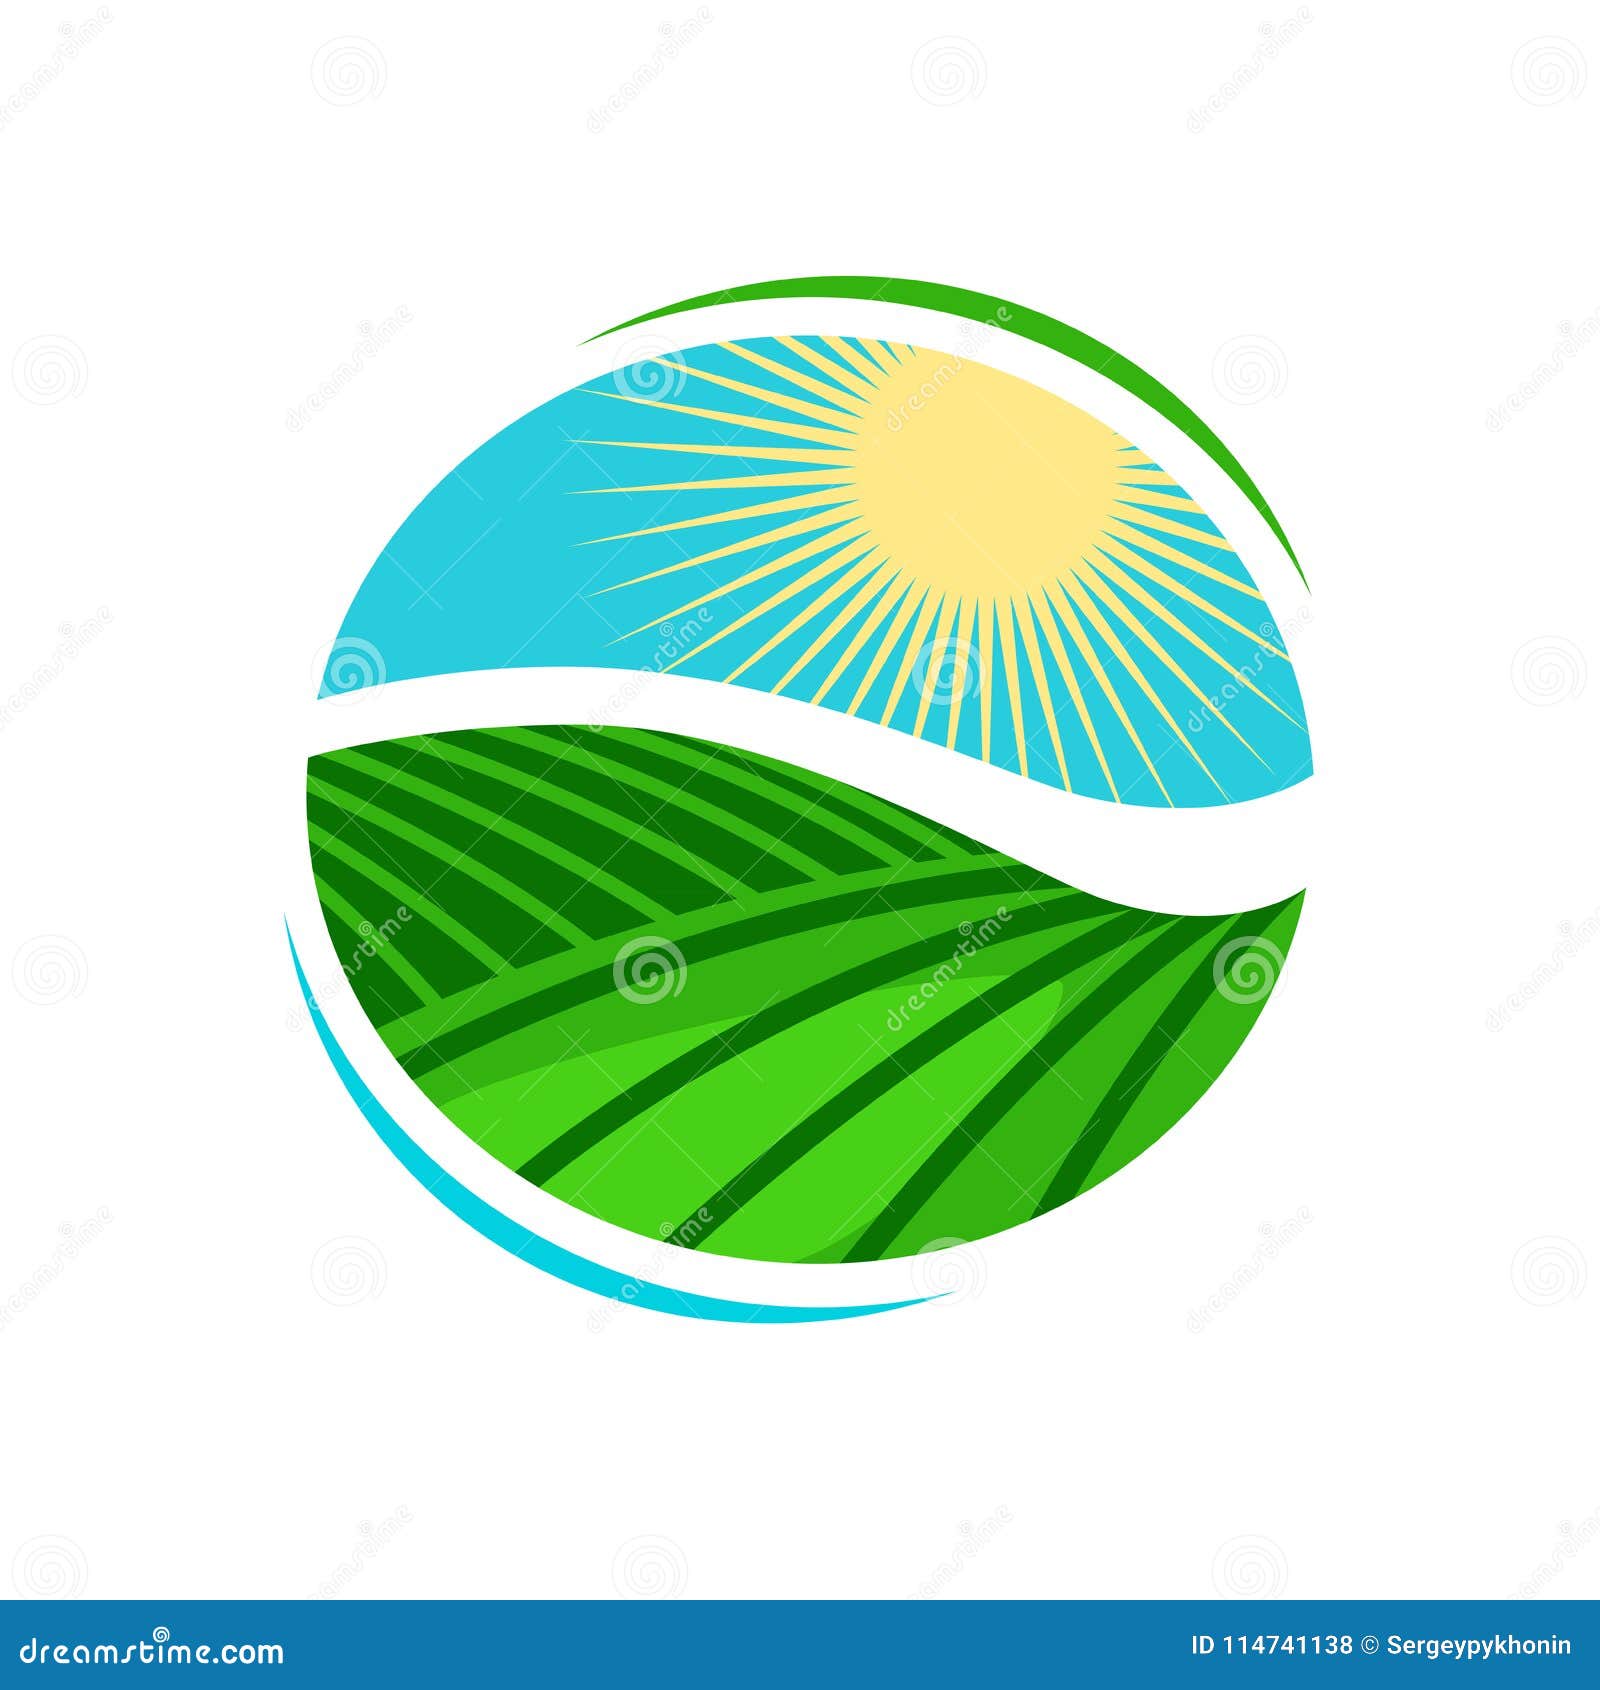 plantation, agriculture logo or label. vineyard, farming icon.  